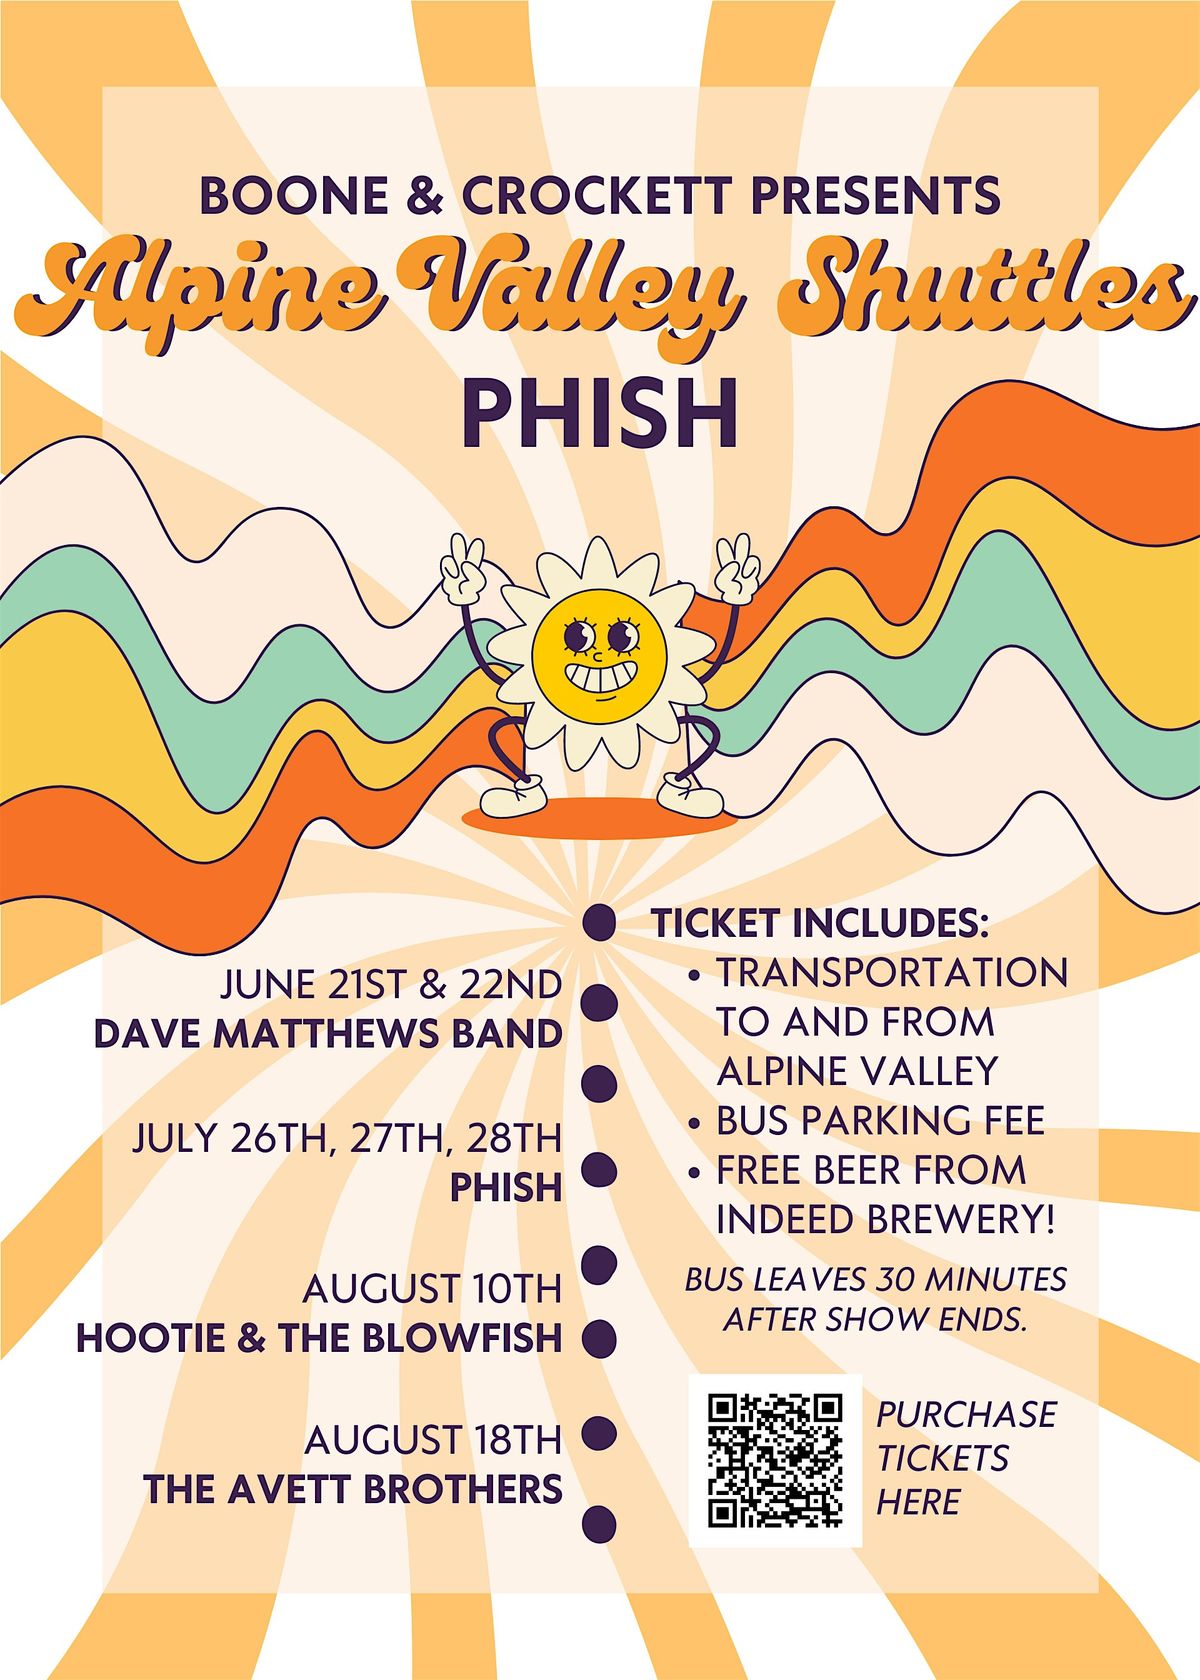 Alpine Valley Shuttle to PHISH - SATURDAY